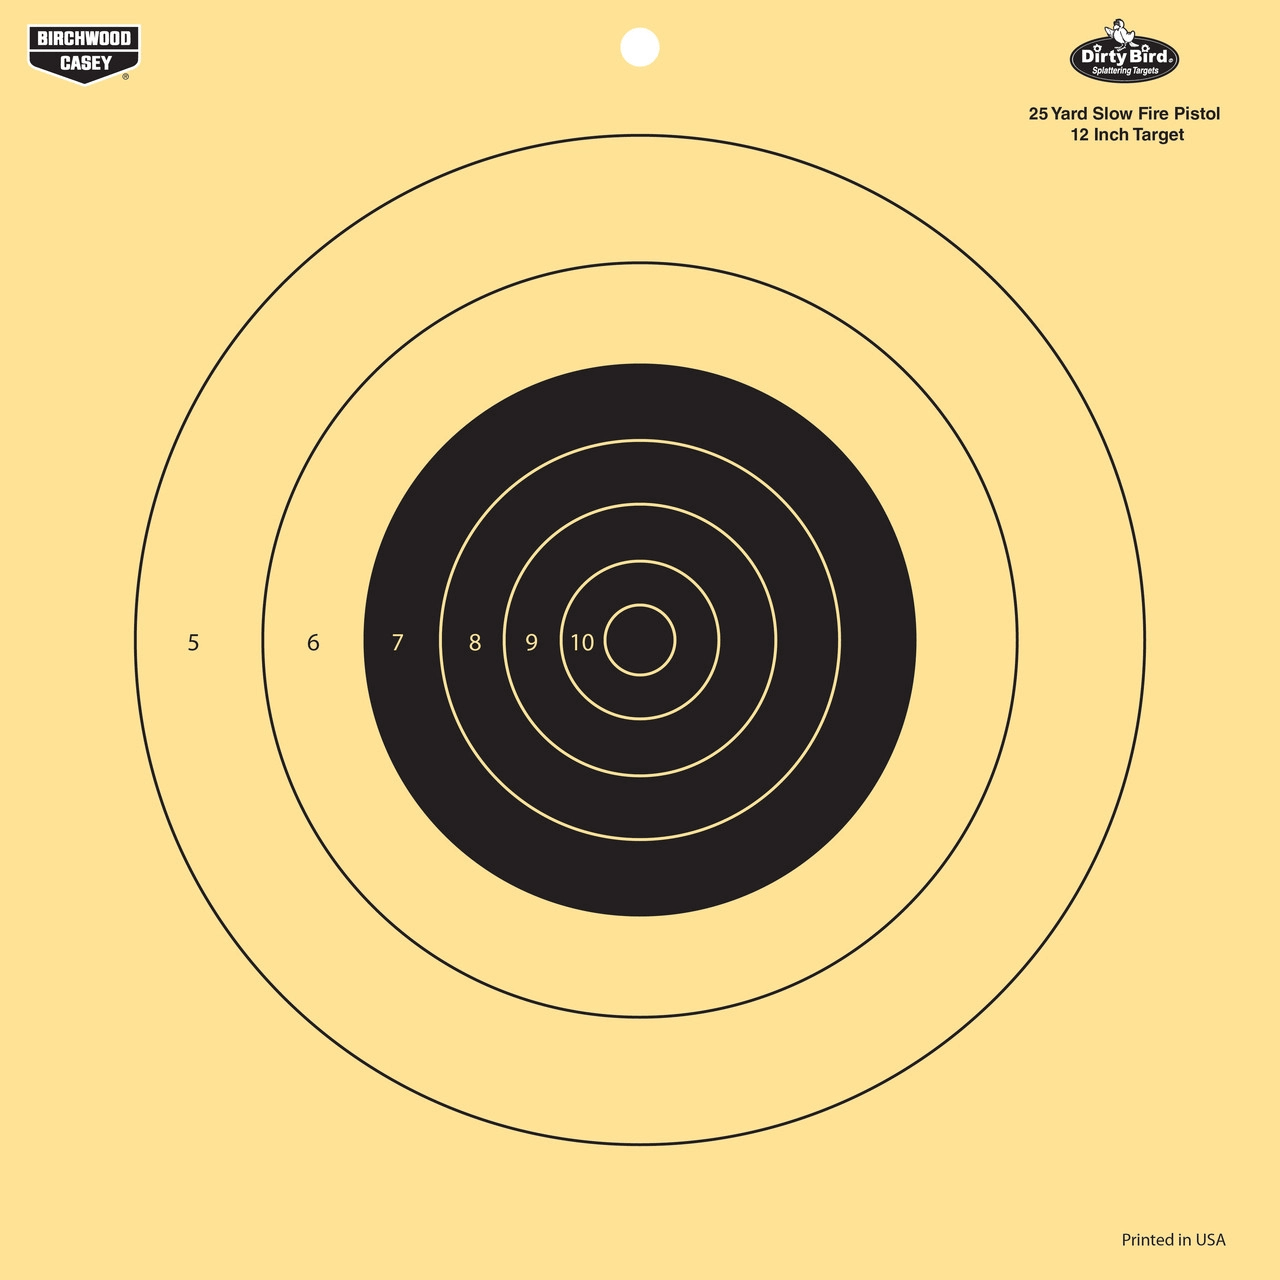 Birchwood Casey Dirty Bird 12 Inch 25 Yard Pistol Reactive Target - 12 Targets BC-35022 - Shooting Accessories